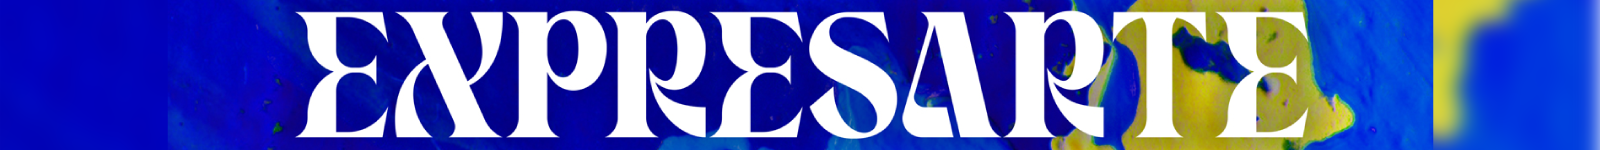 Logo de Expresarte